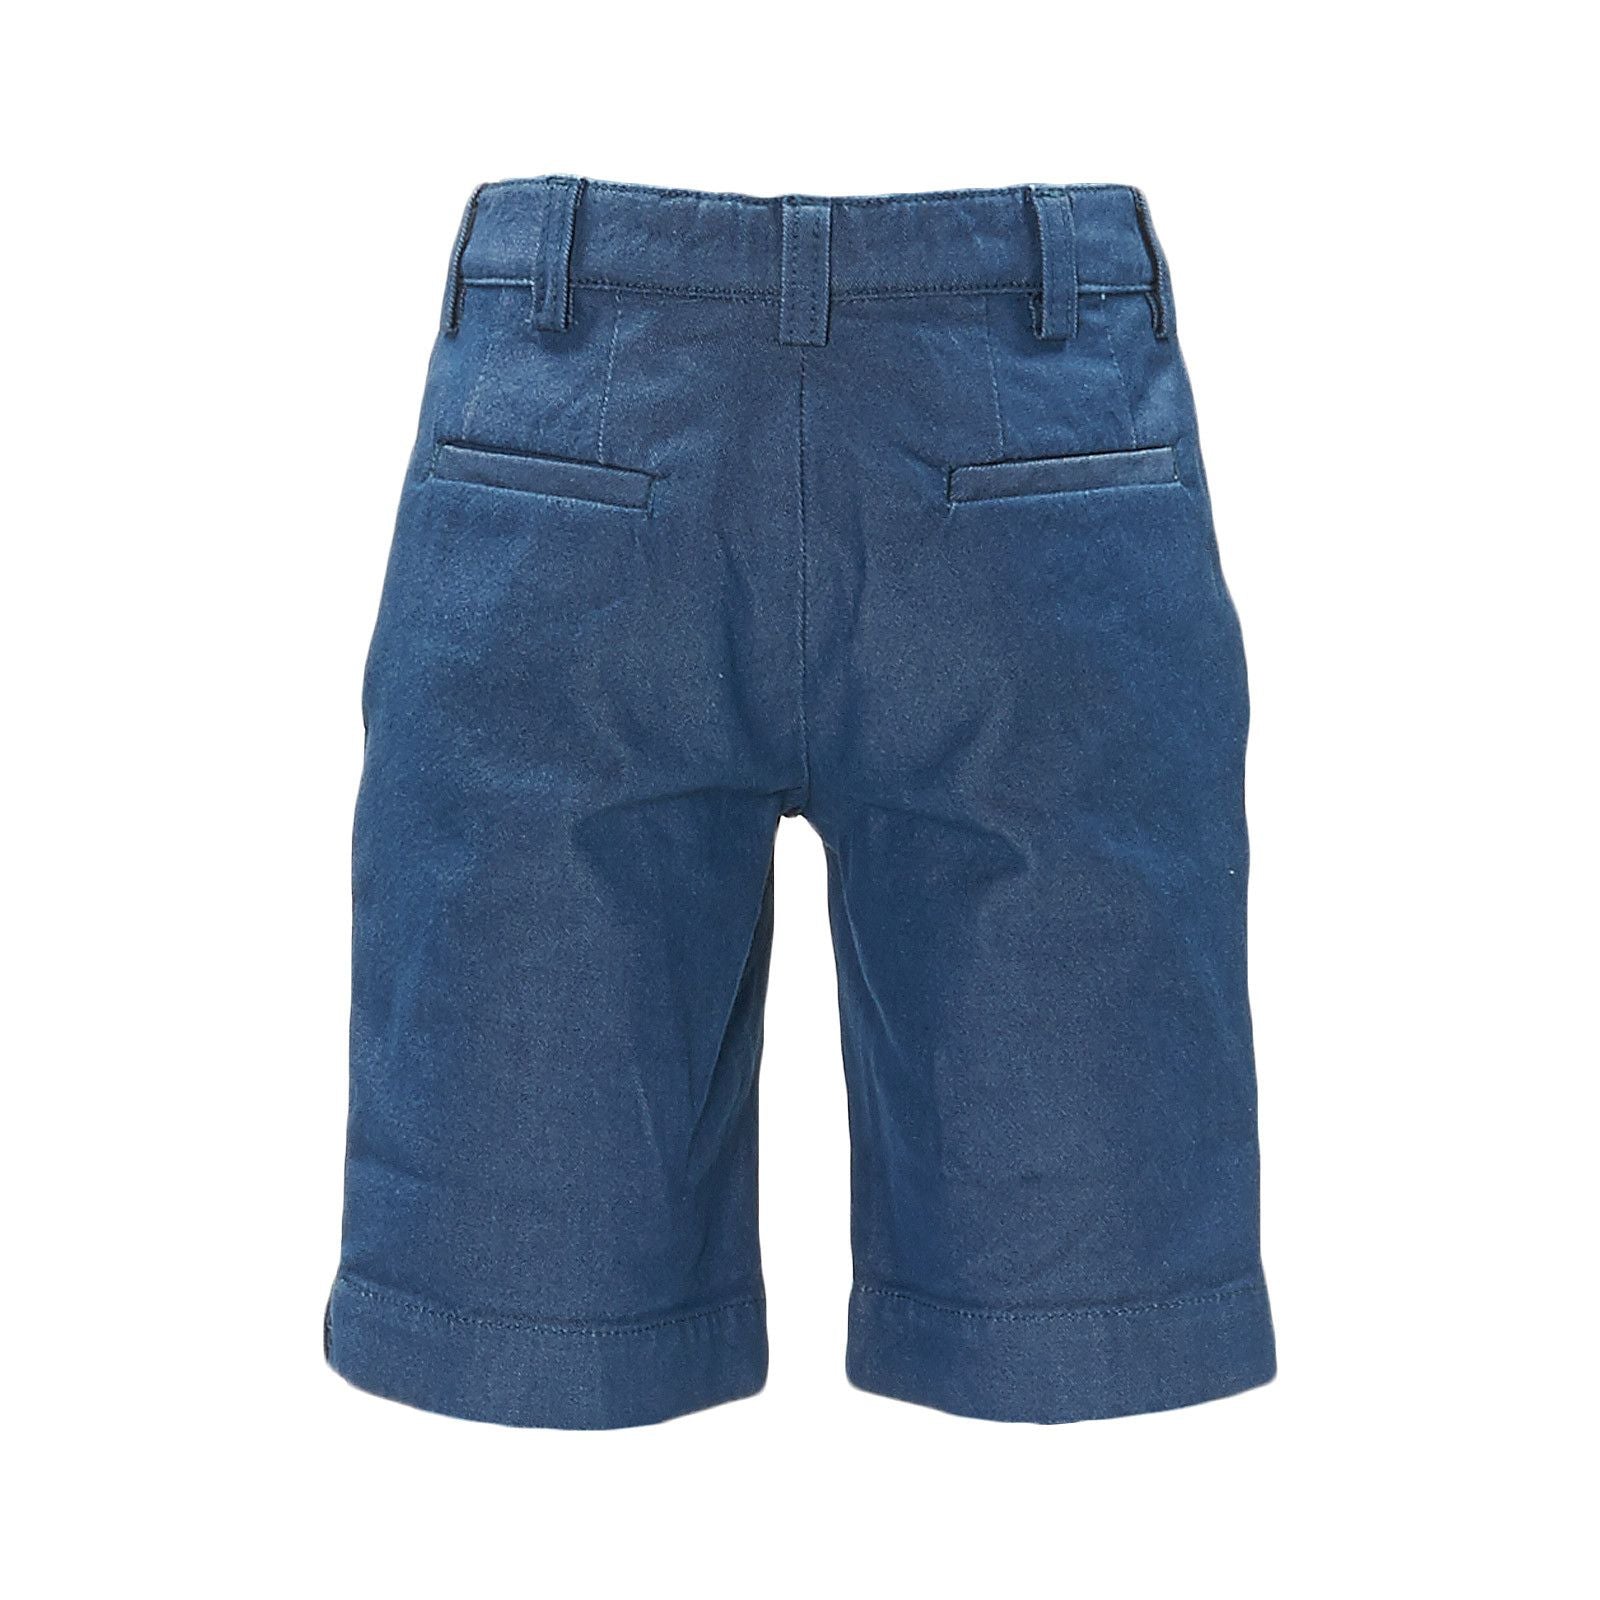 Boys Navy Blue Cotton Jersey Short - CÉMAROSE | Children's Fashion Store - 2